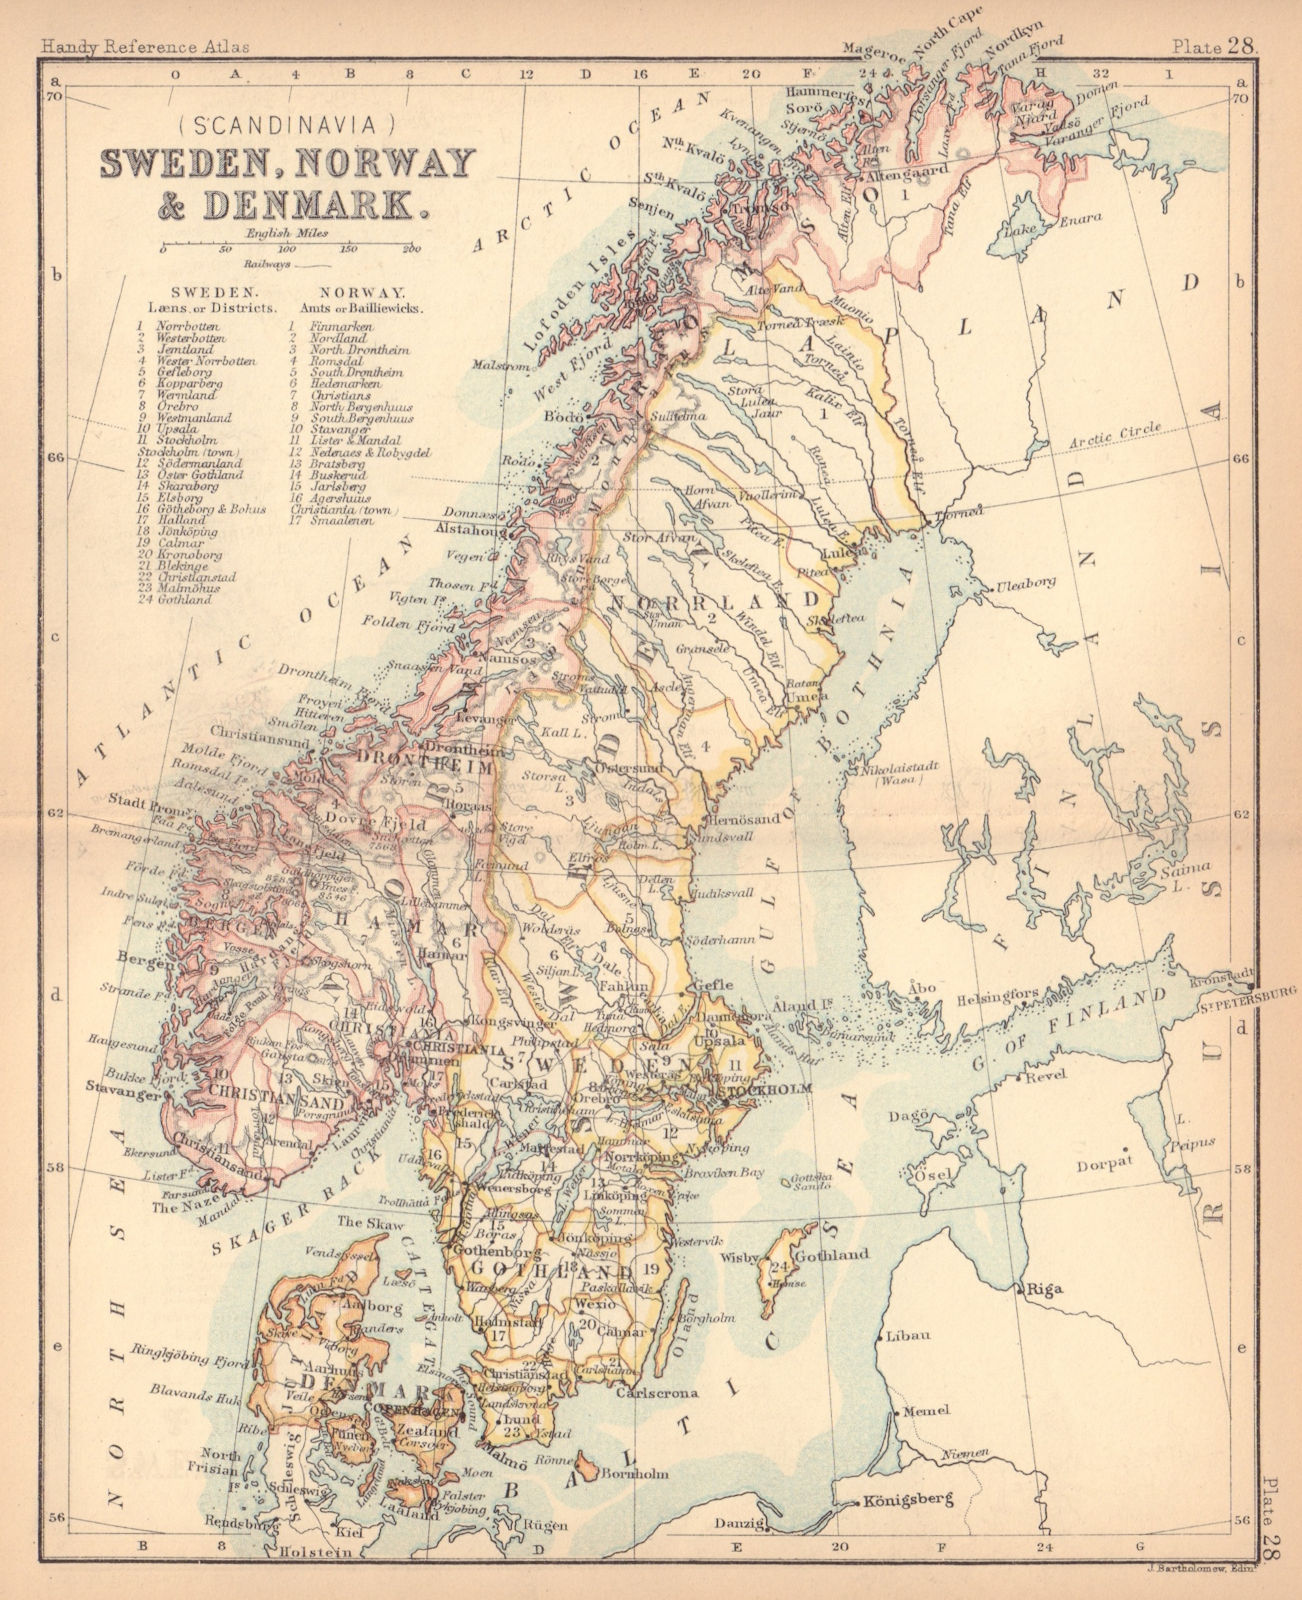 Associate Product Sweden, Norway, & Denmark. Scandinavia. BARTHOLOMEW 1888 old antique map chart